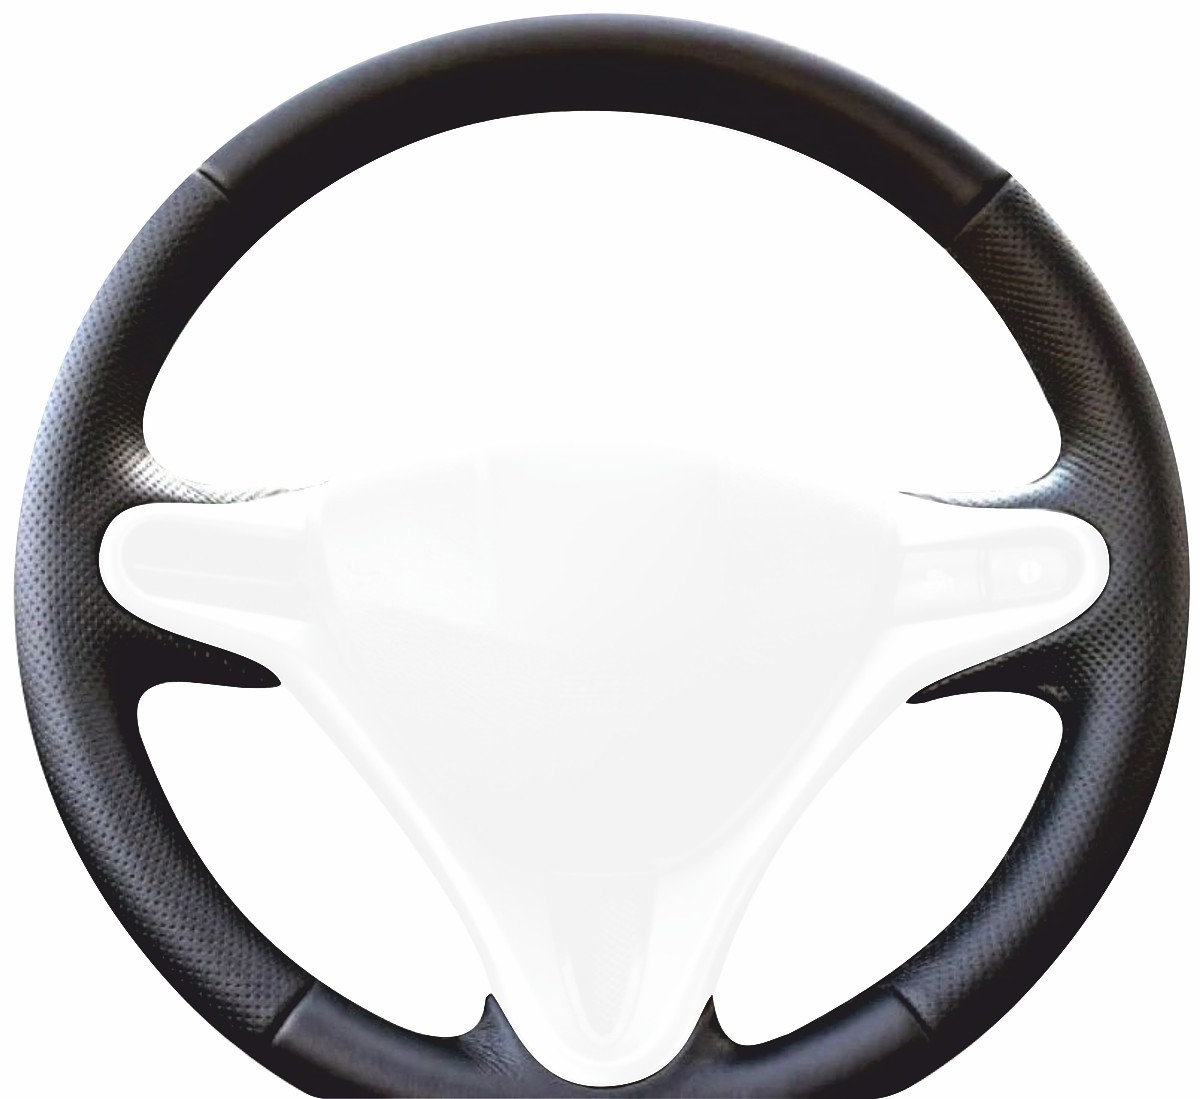 2009-14 Honda Insight steering wheel cover